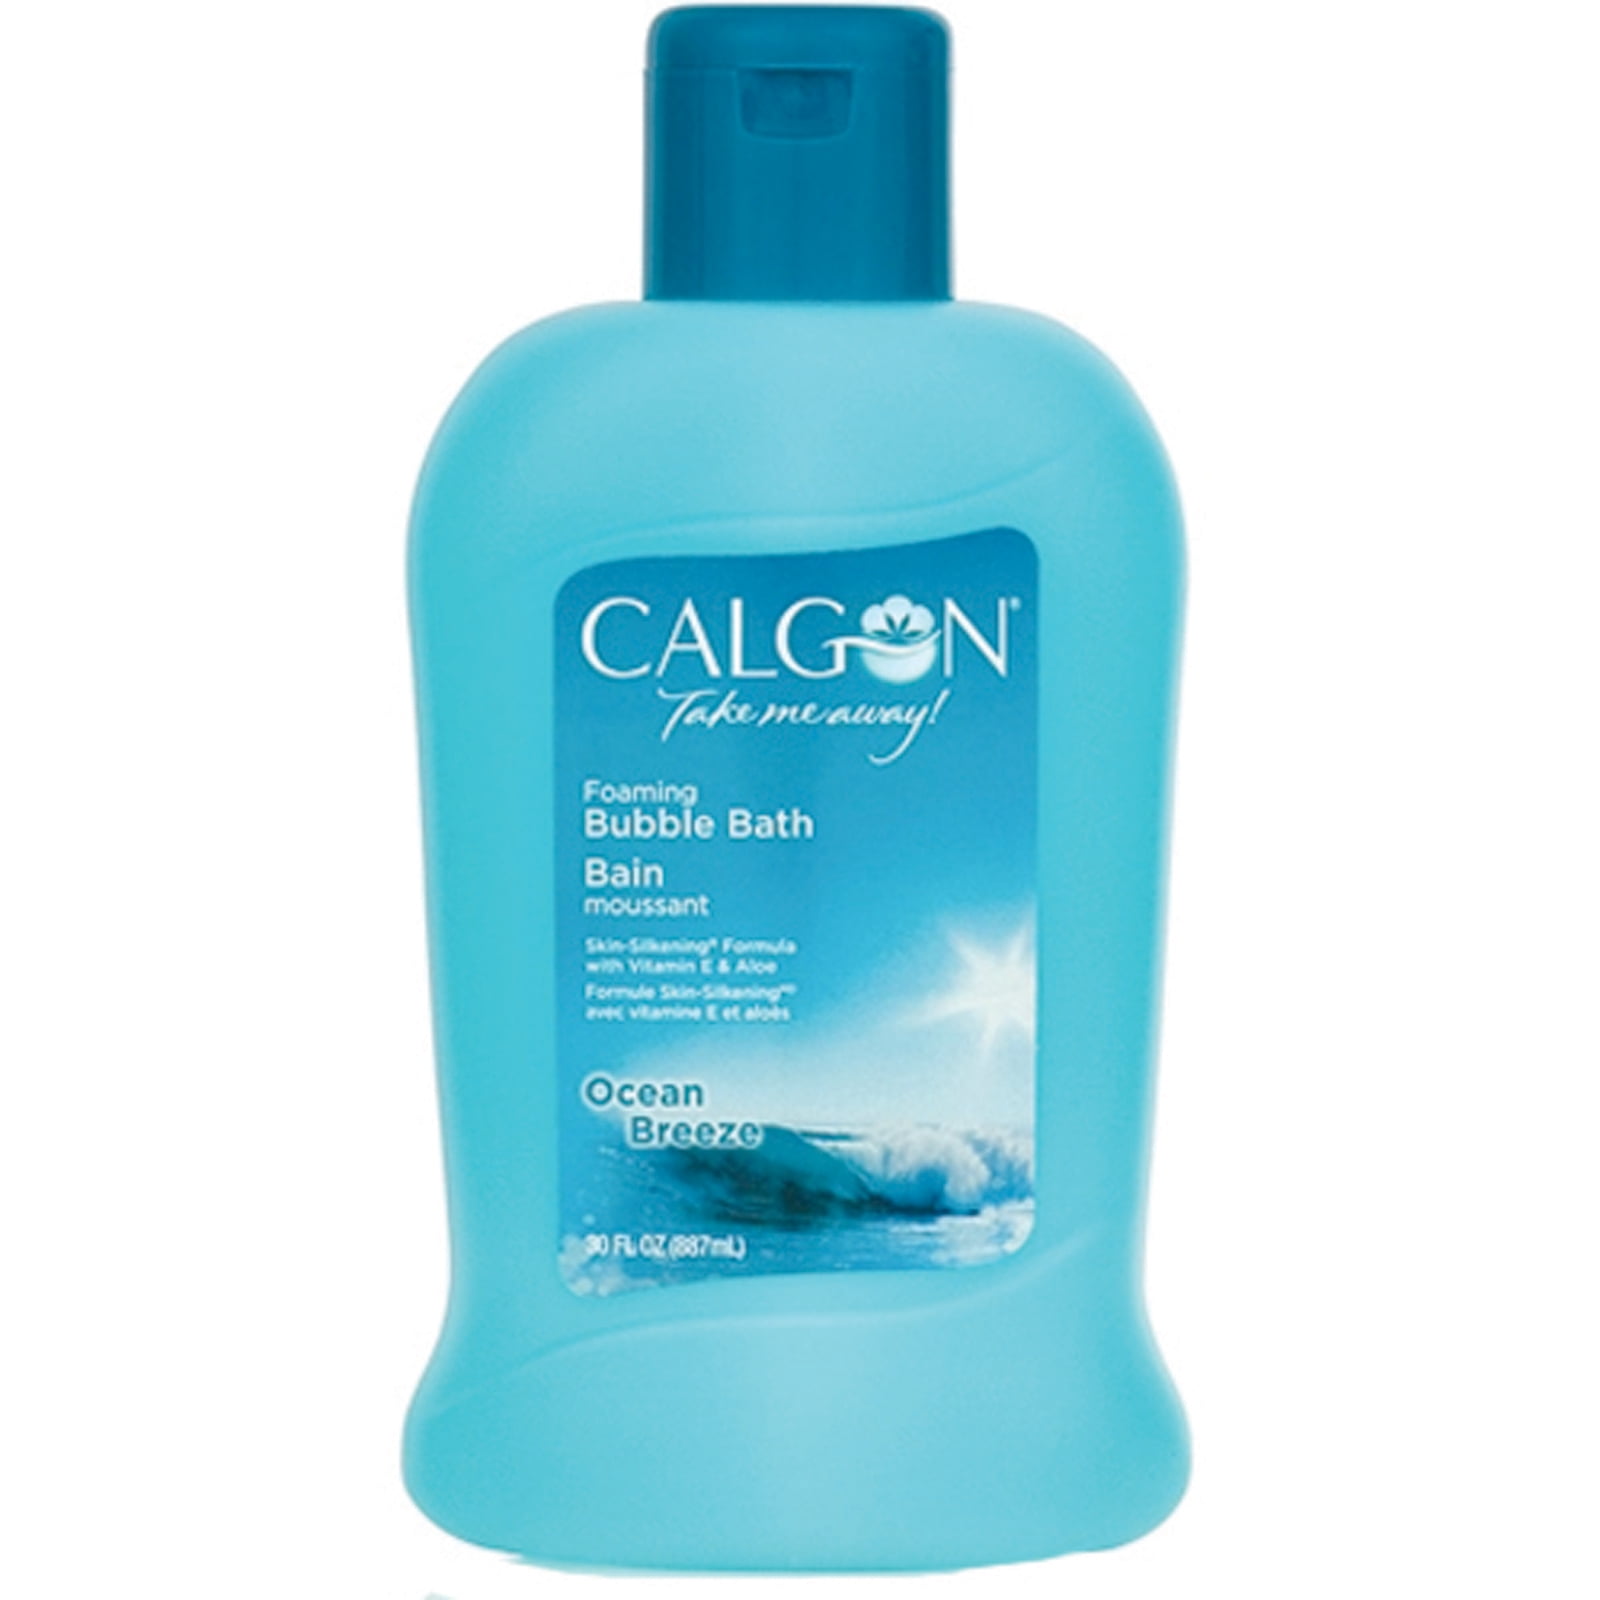 calgon bubble bath